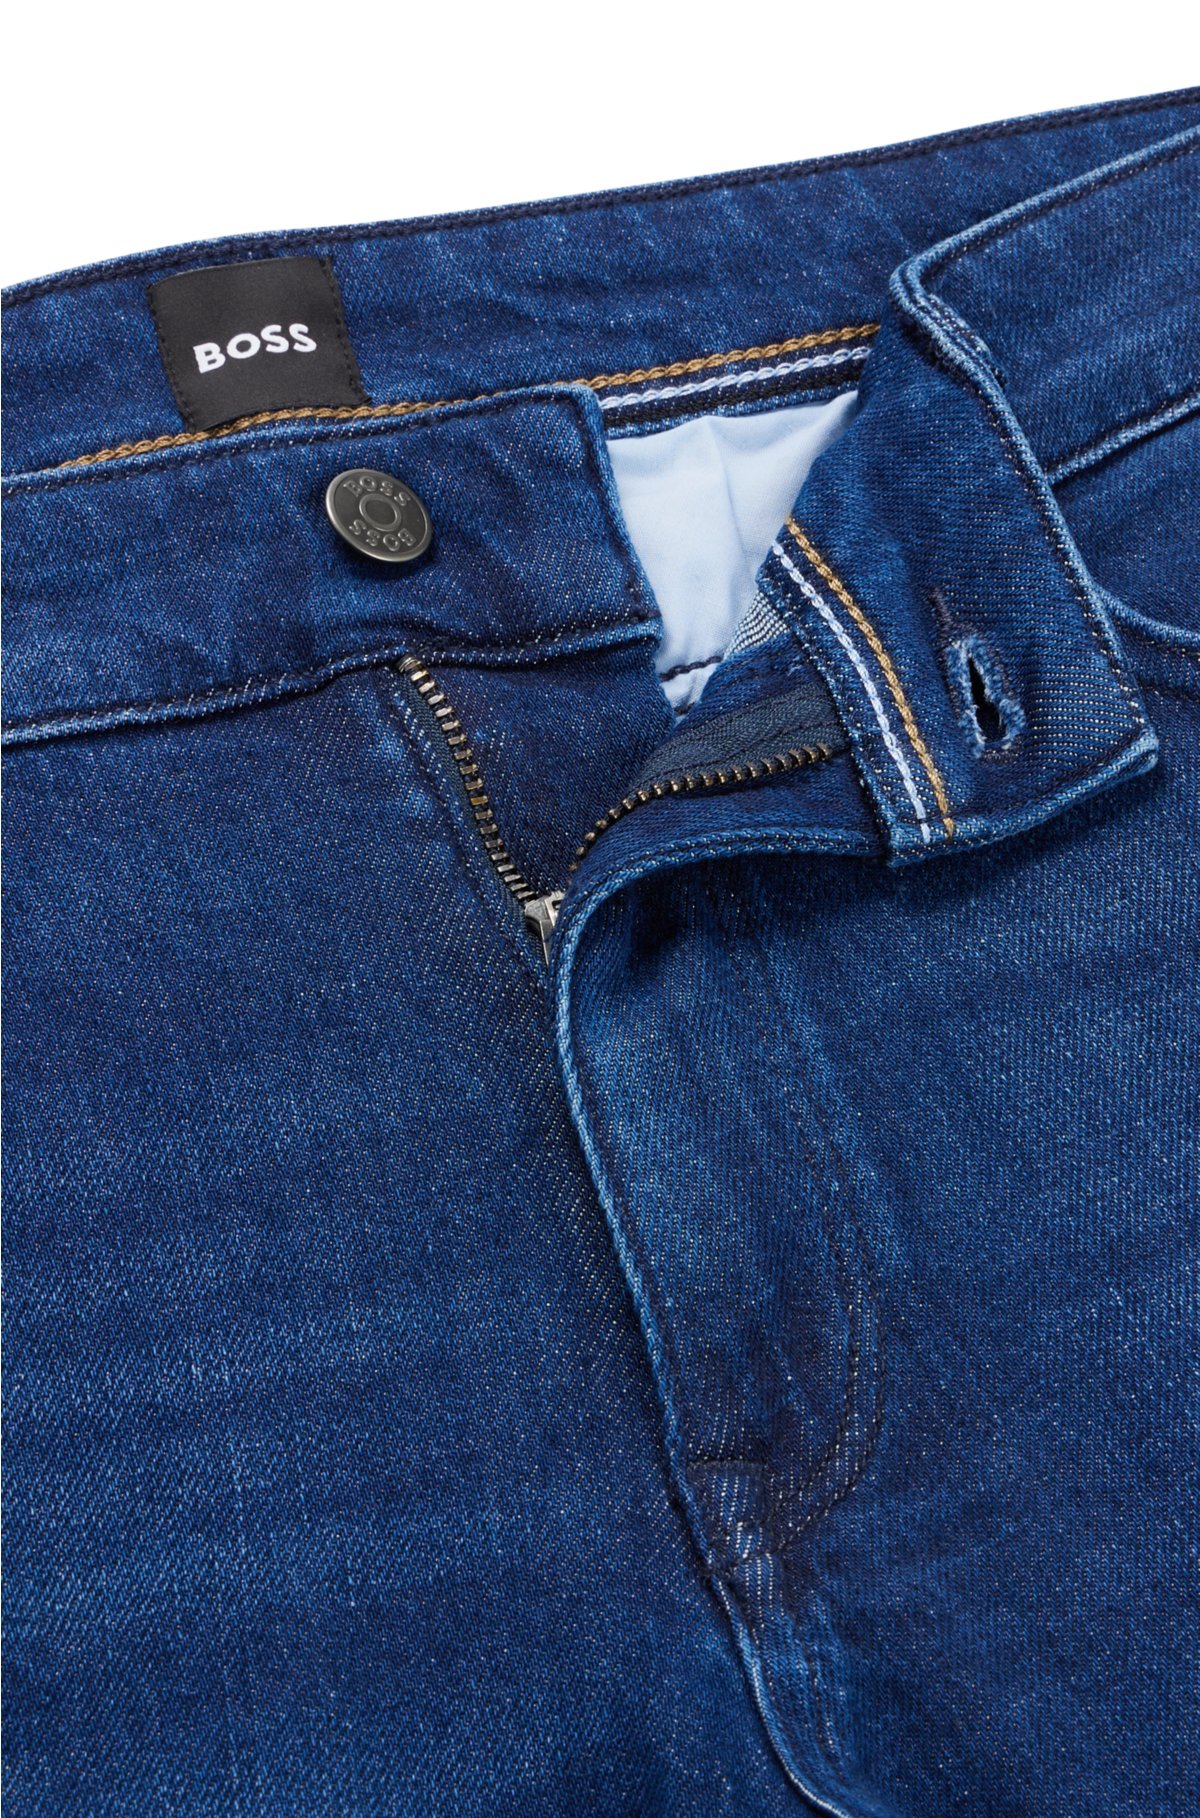 BOSS - Dunkelblaue Regular-Fit Jeans bequemem aus Stretch-Denim